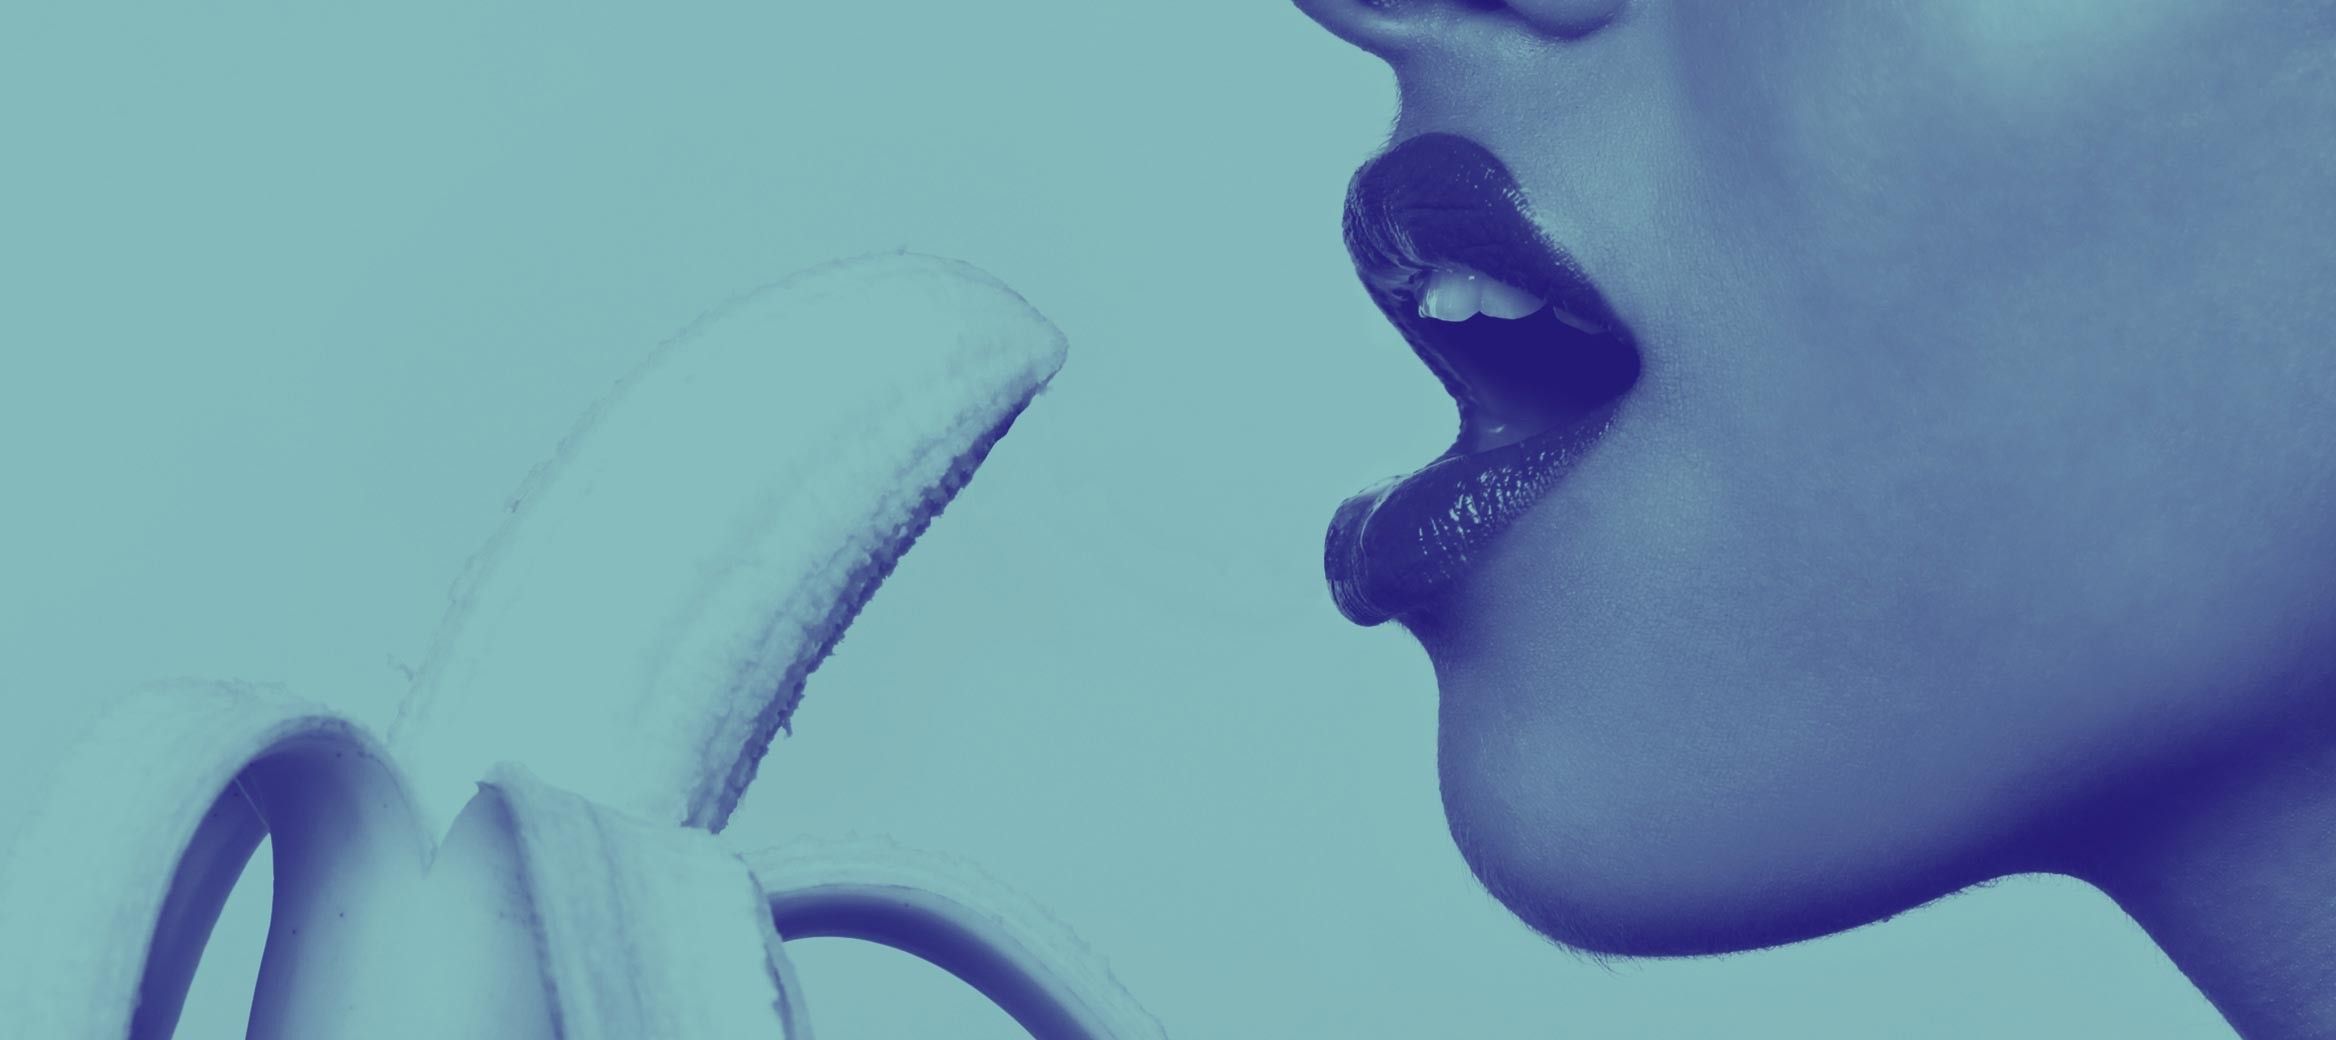 Woman eating a banana sexually.